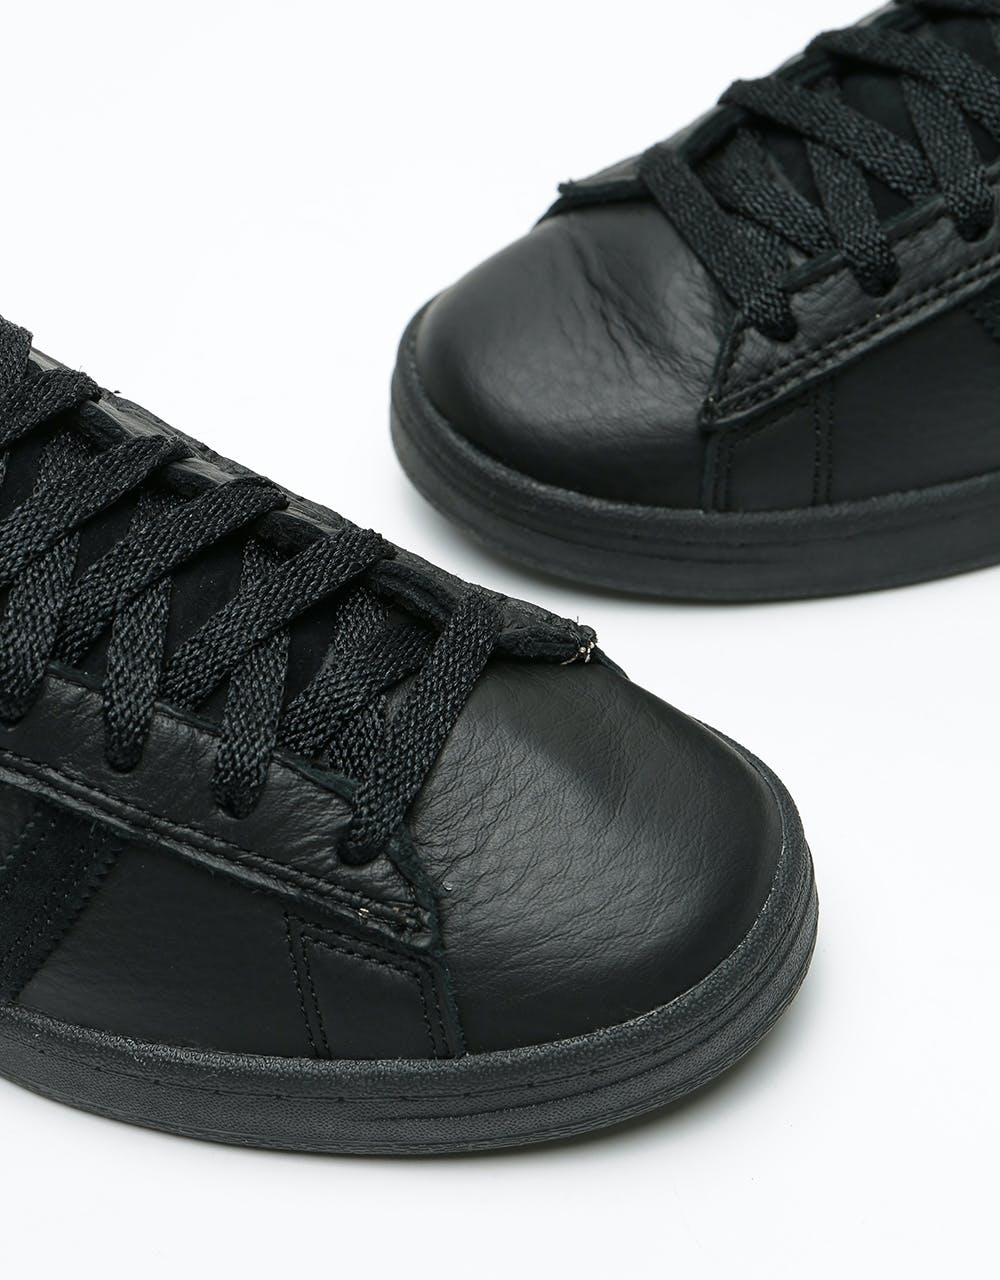 Adidas x Silas Campus ADV Skate Shoes - Core Black/Core Black